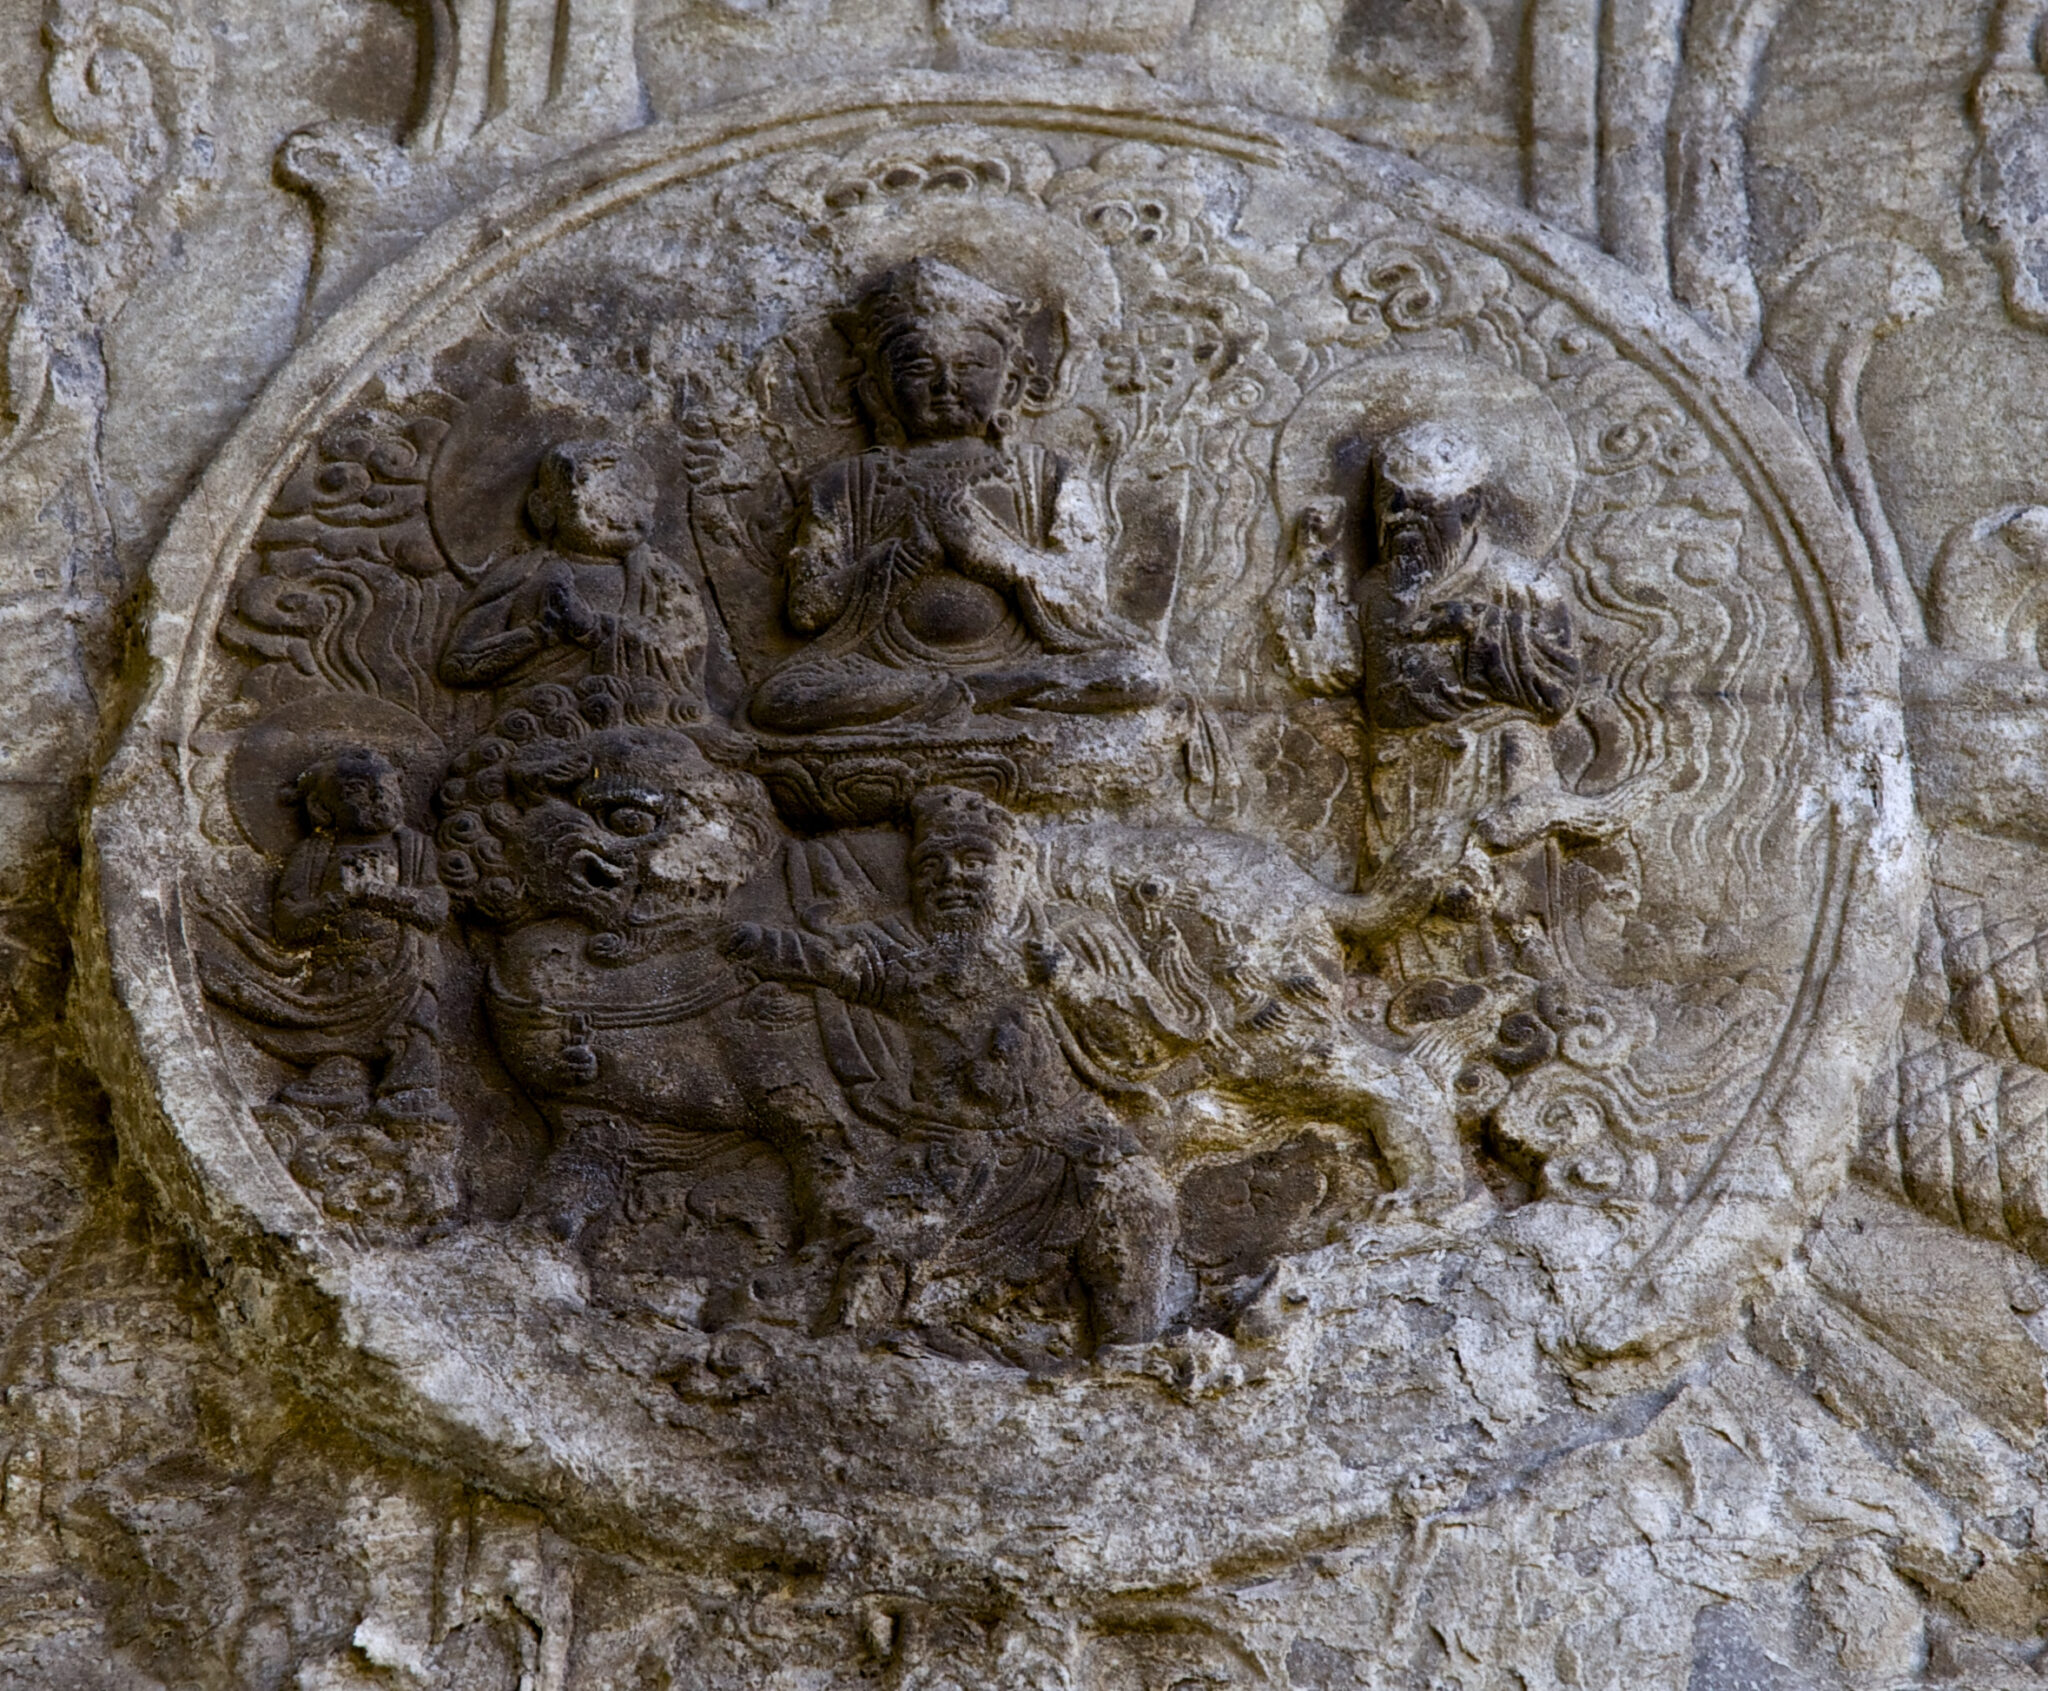 Weathered stone roundel depicting seated Buddha, attendants, and fantastical creature amid stylized landscape